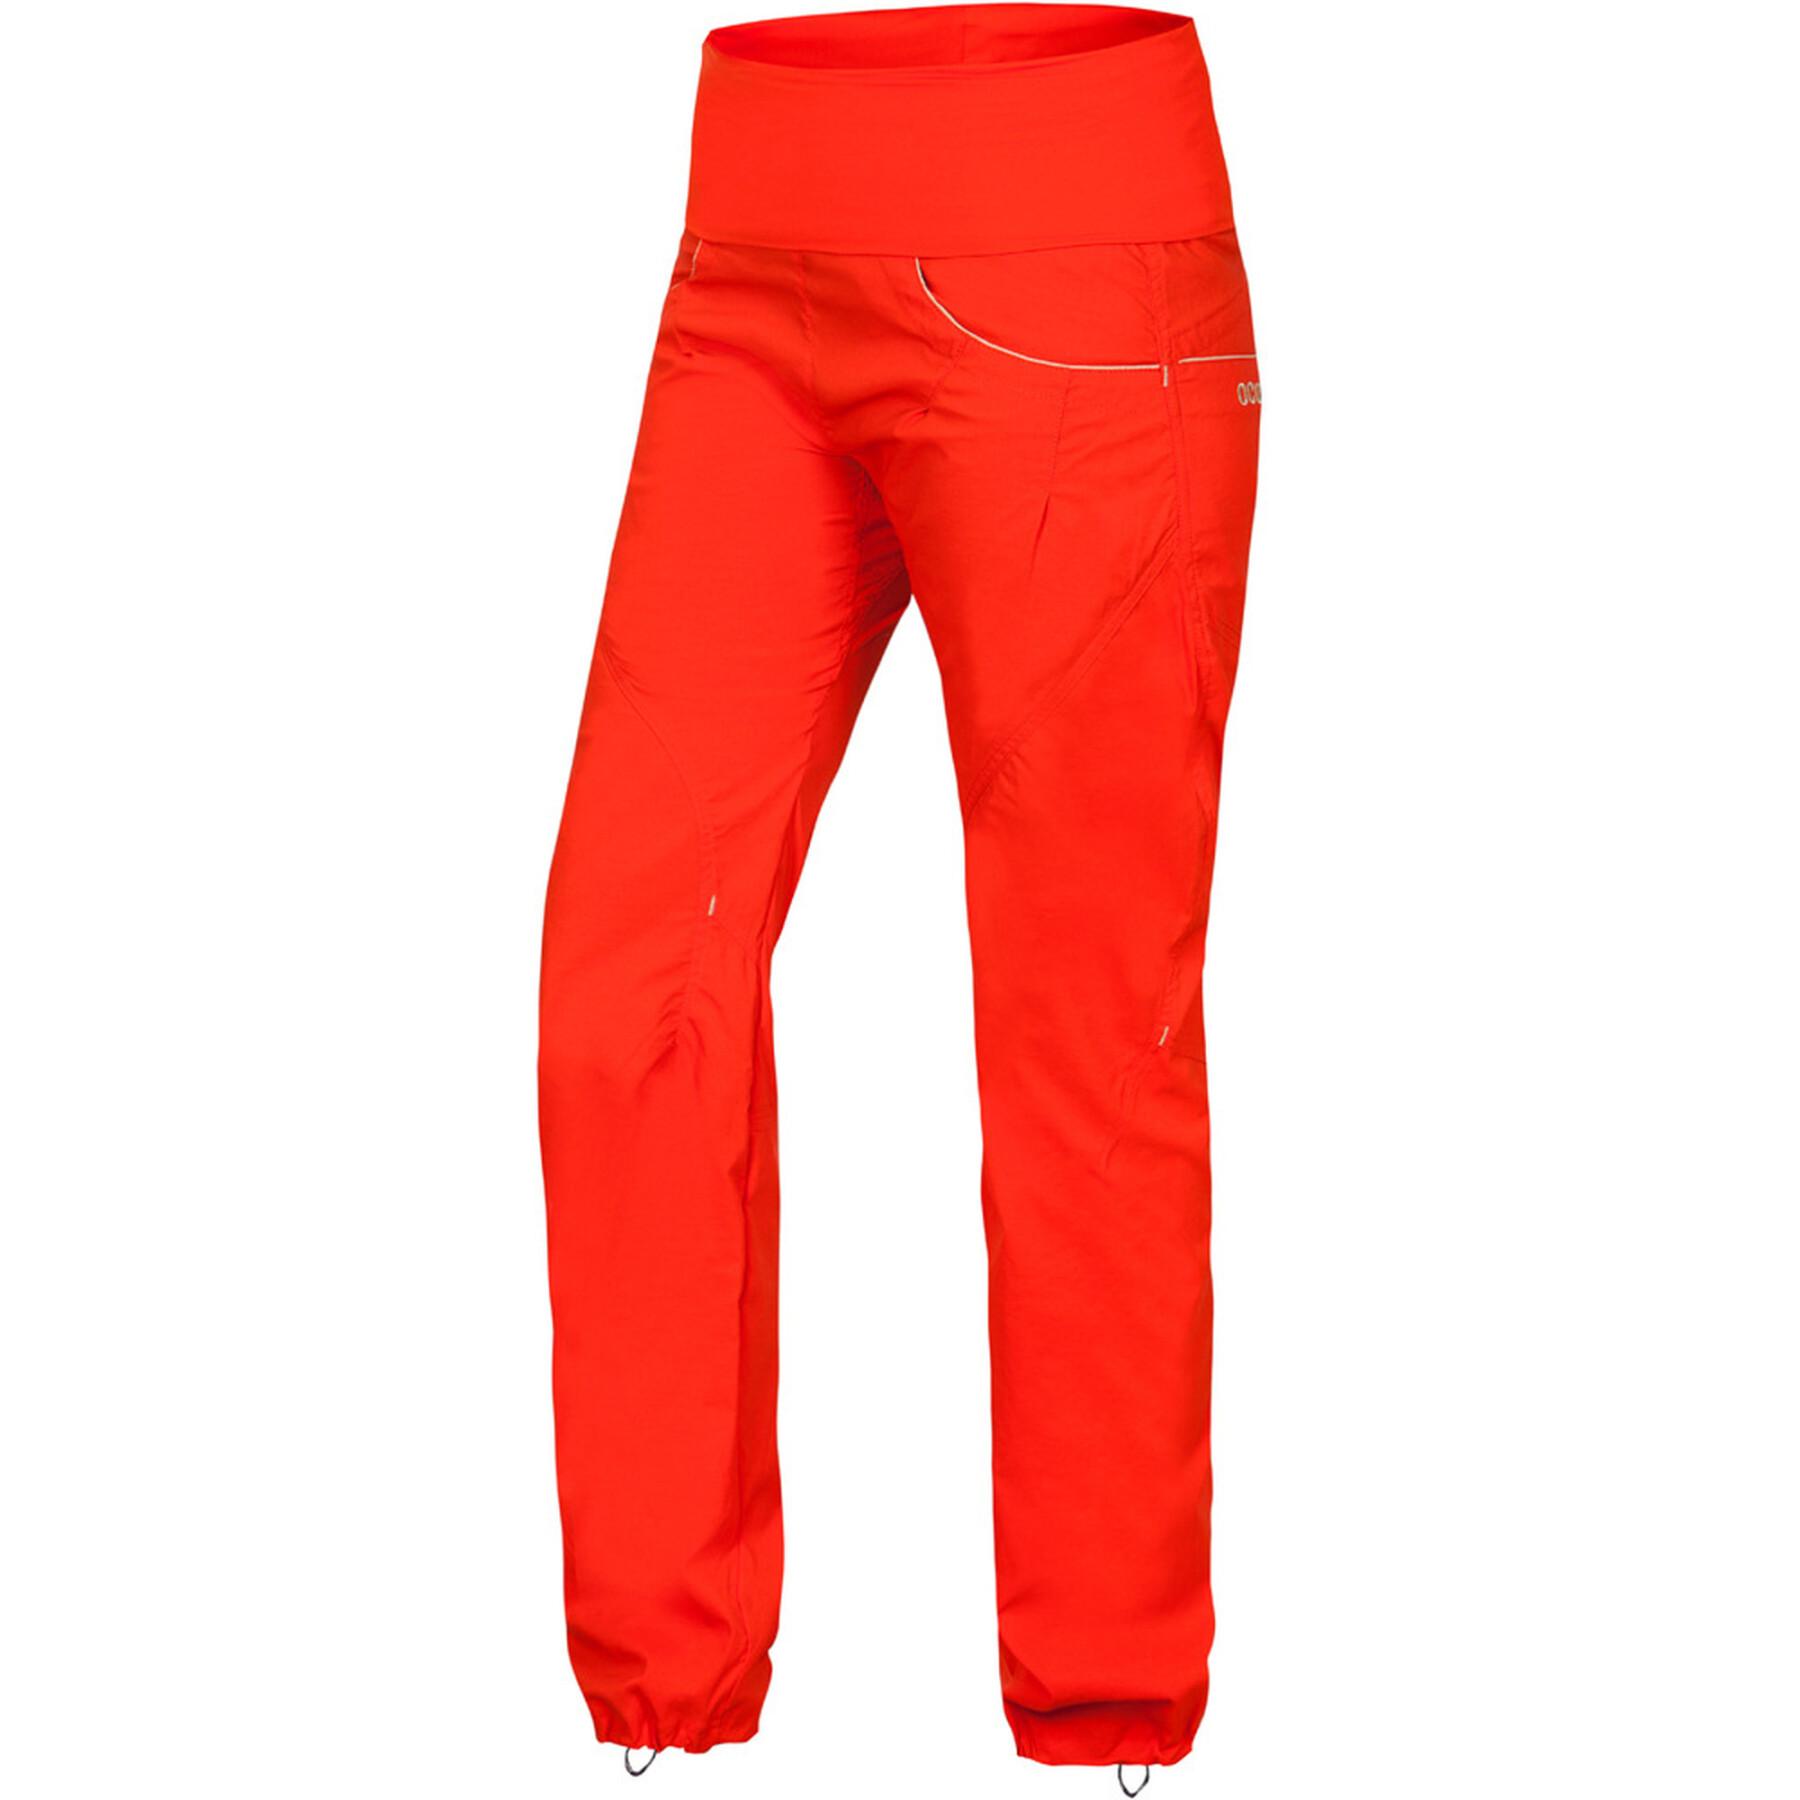 Women's pants Ocun Noya orange